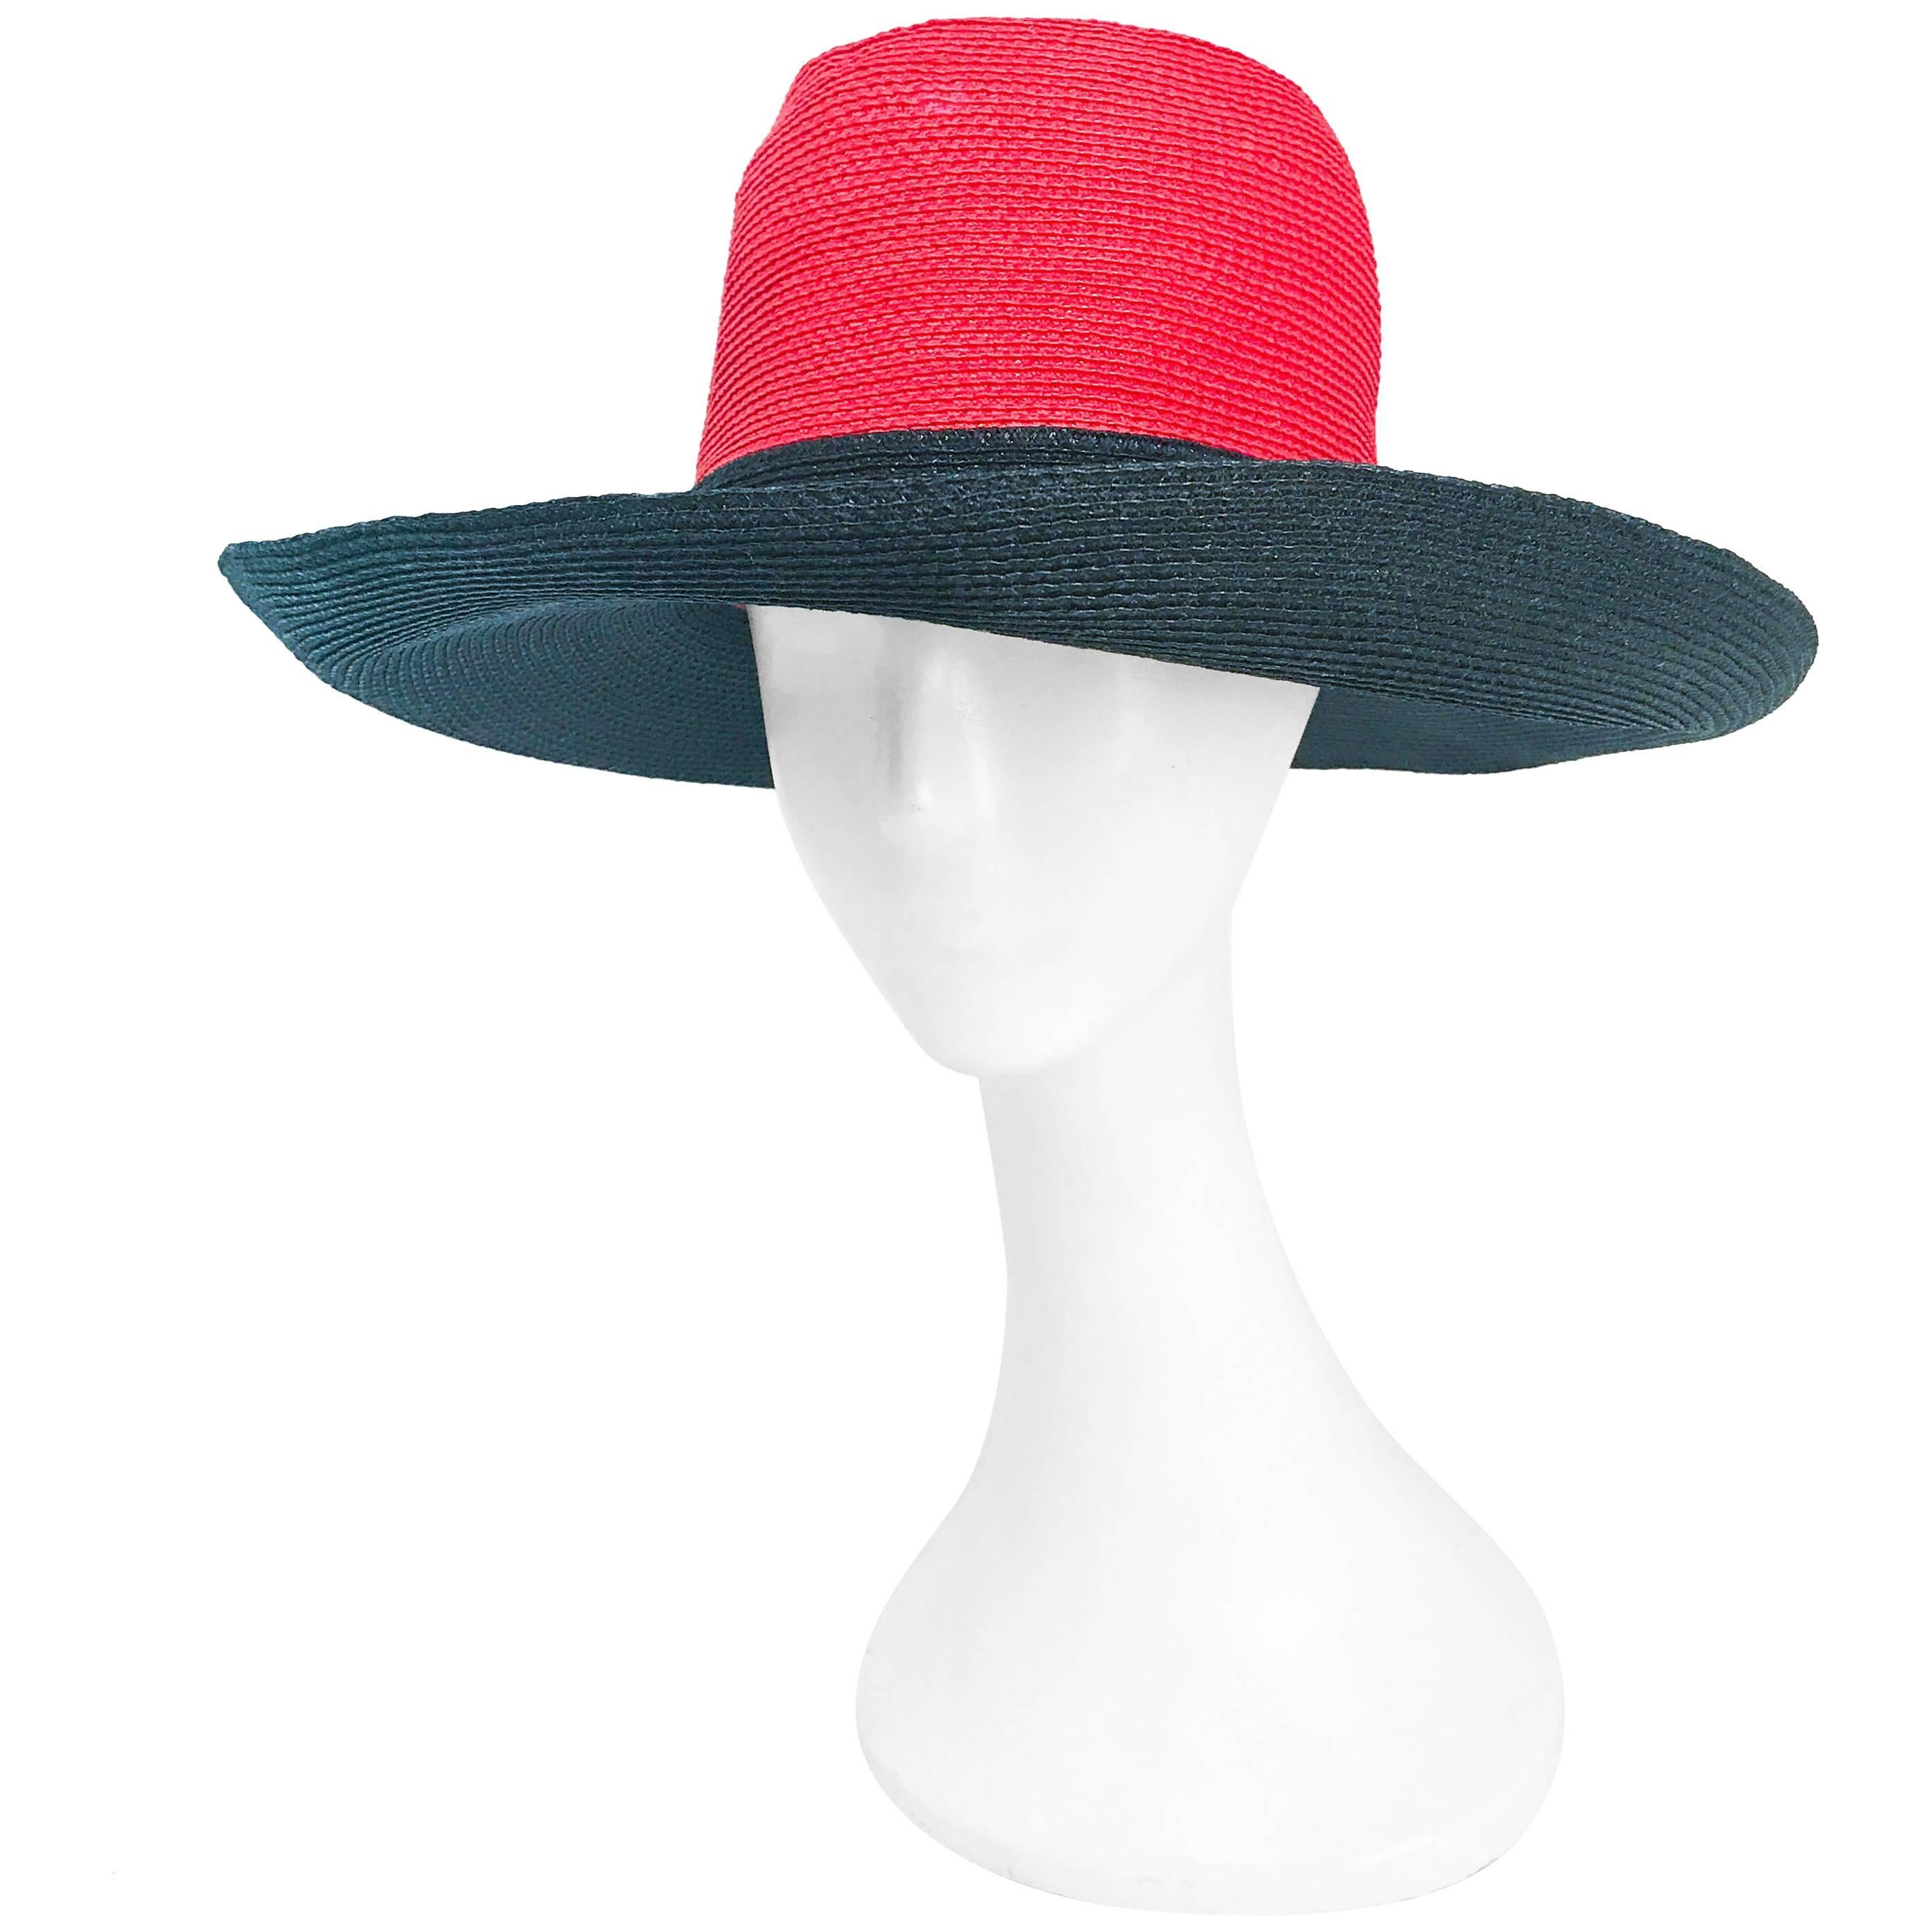 1970s Frank Olive Red and Black Wide-Brimmed Hat